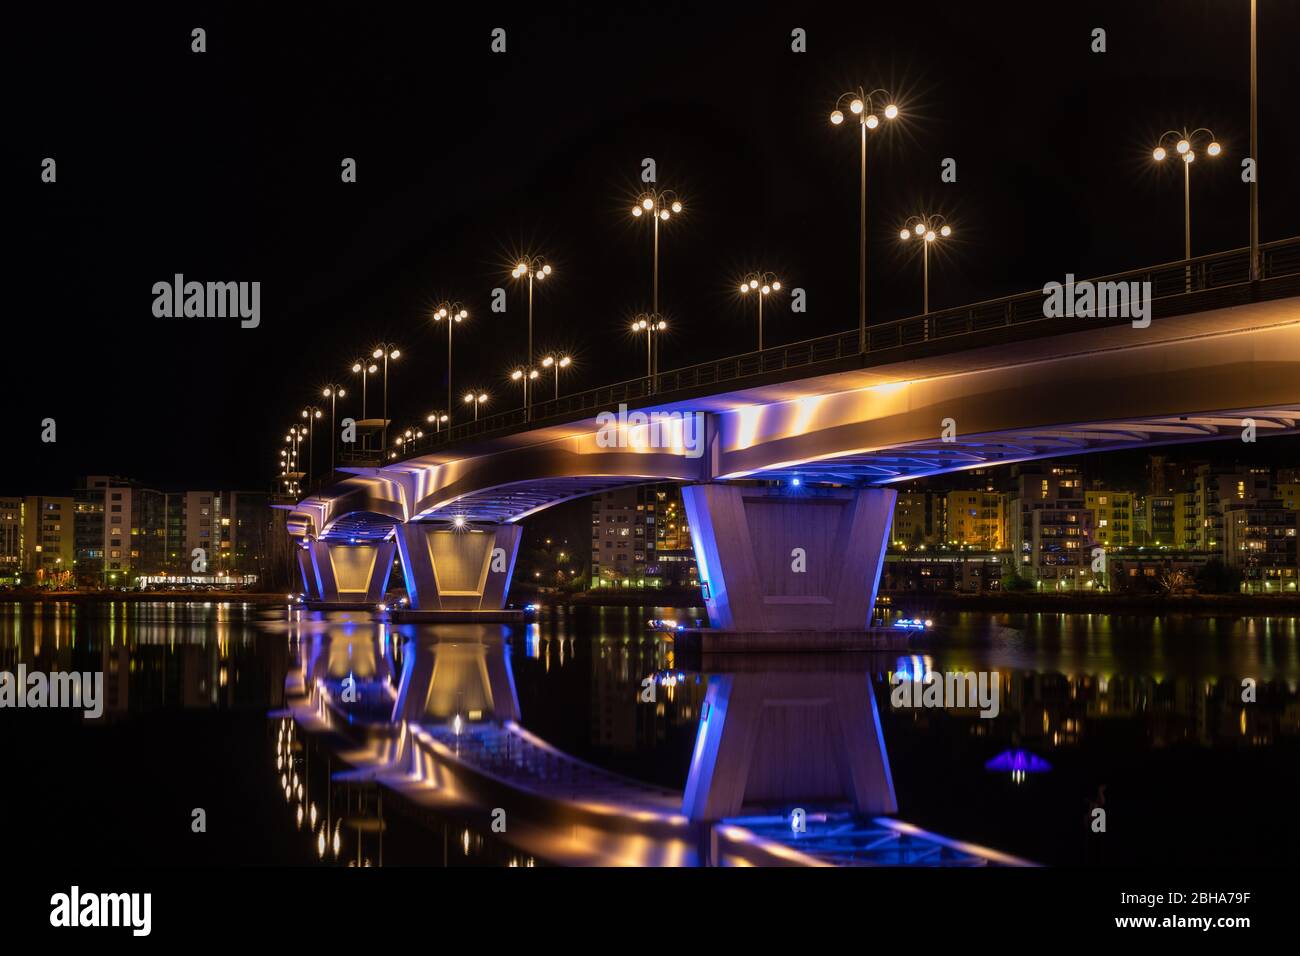 Illuminated bridge over still water with reflections Stock Photo